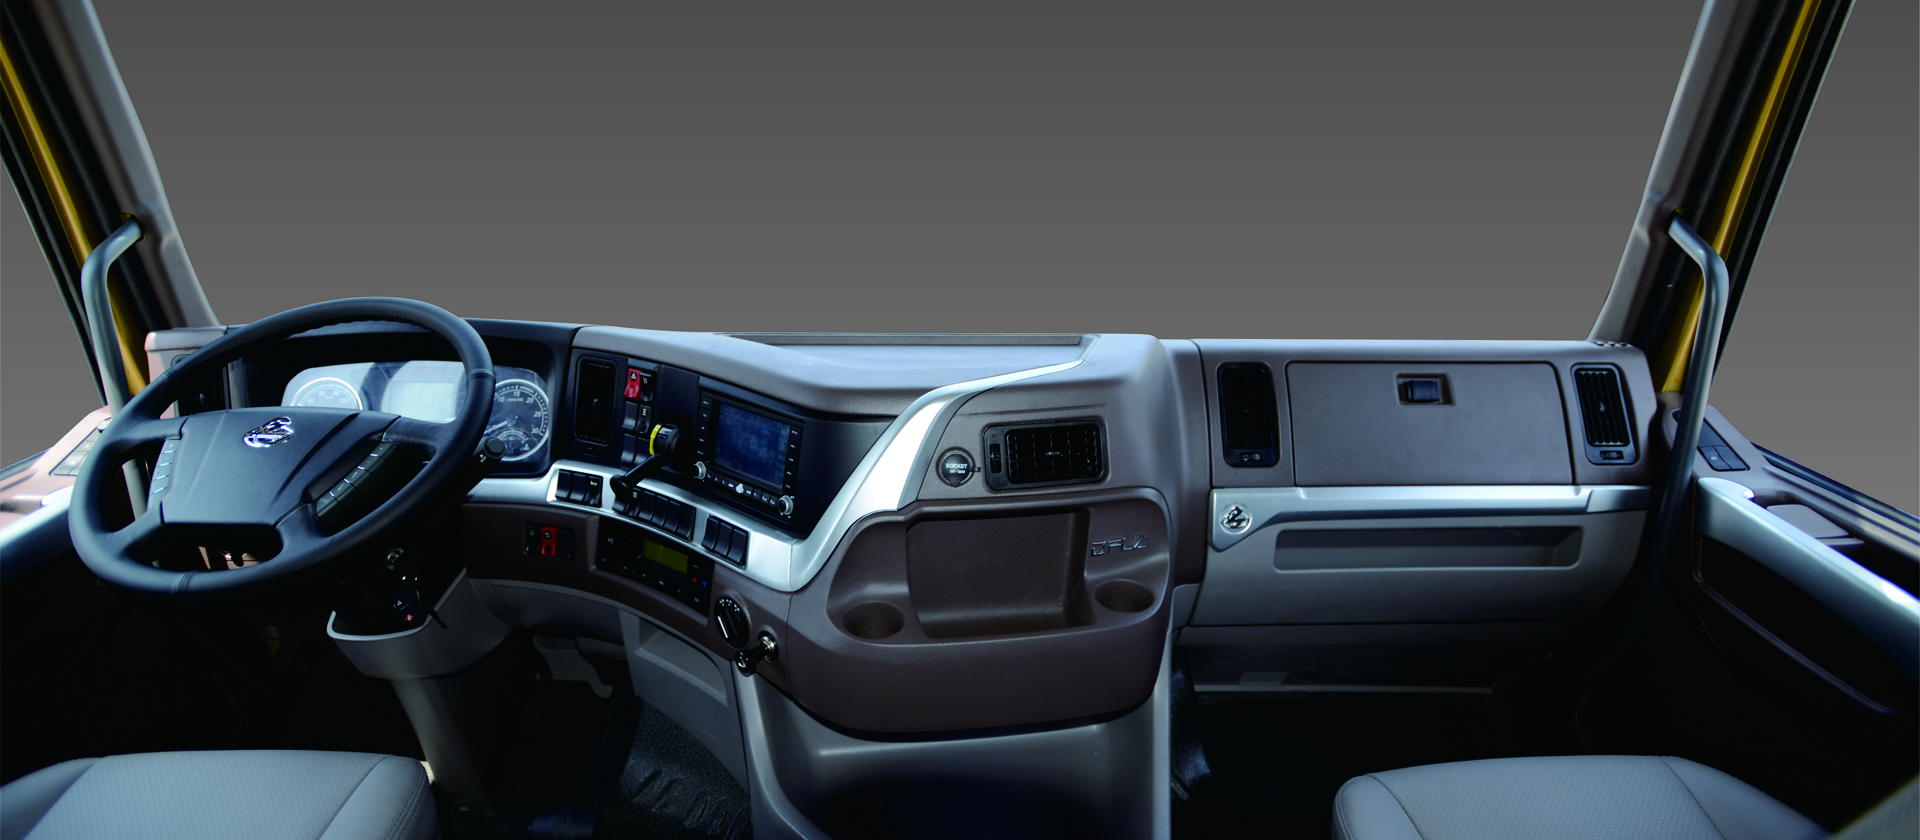 h7工程车 驾驶室匹配全新全浮悬置内饰、一体式前大灯、仪表台等，欧洲级超大空间以及兼具亲和力与科技感的内饰。